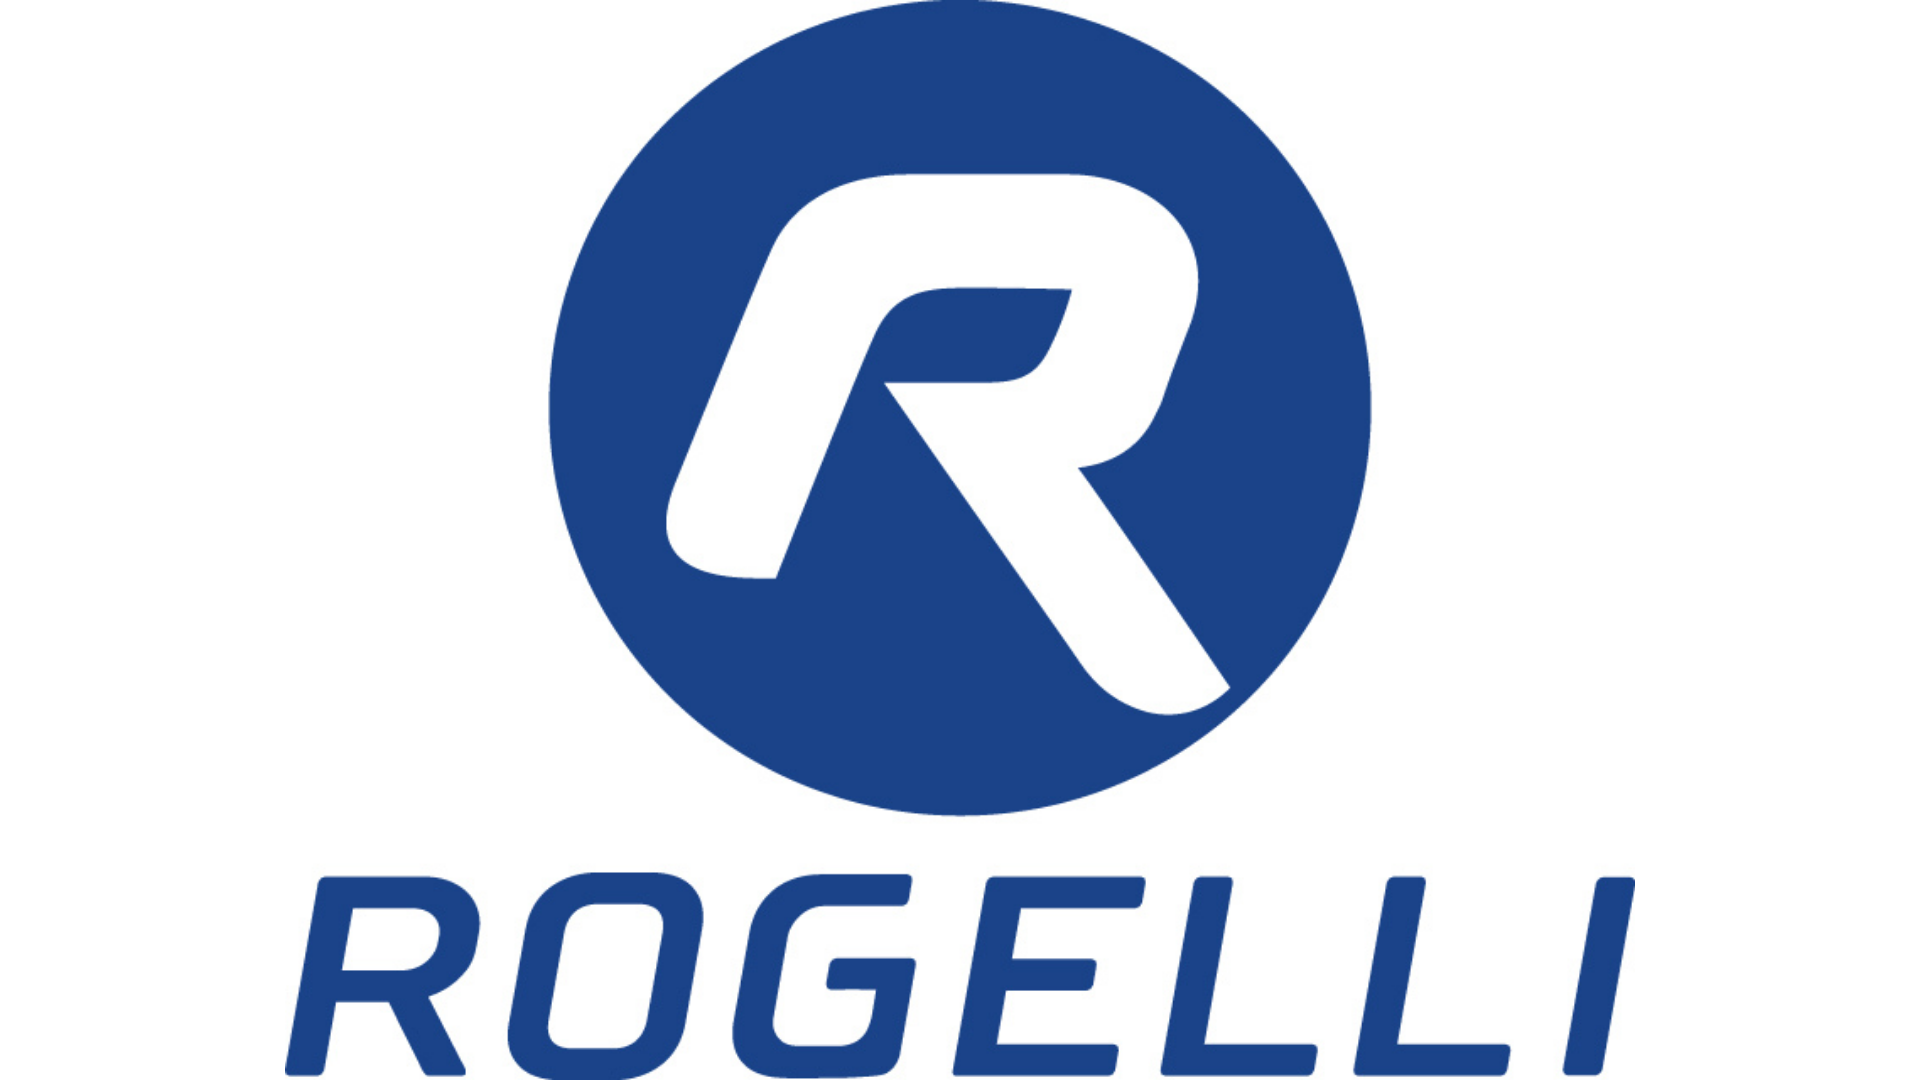 Rogelli